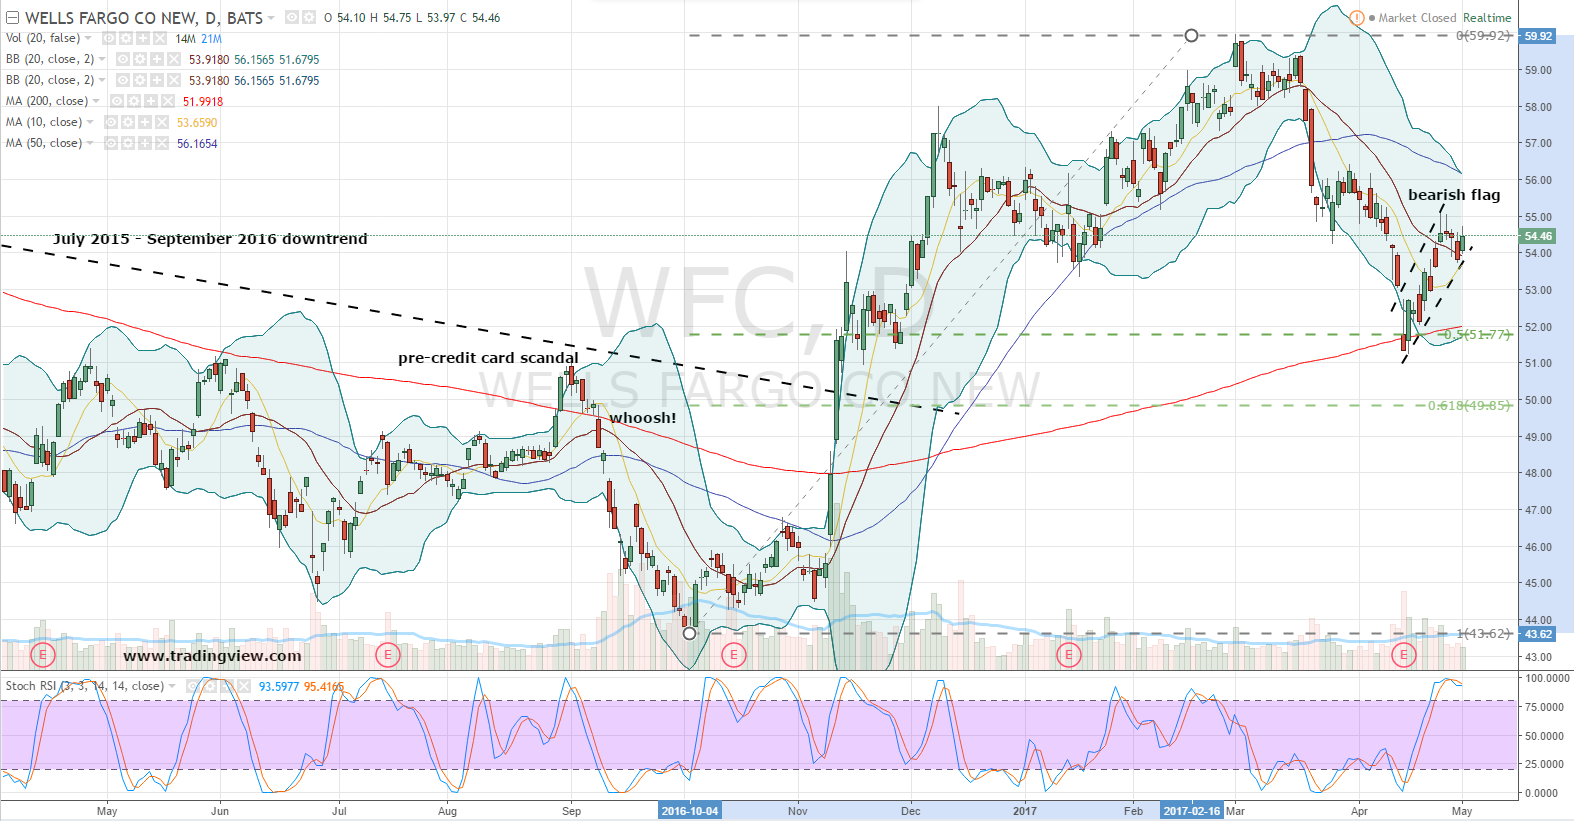 Financial Stocks to Short: Wells Fargo (WFC)